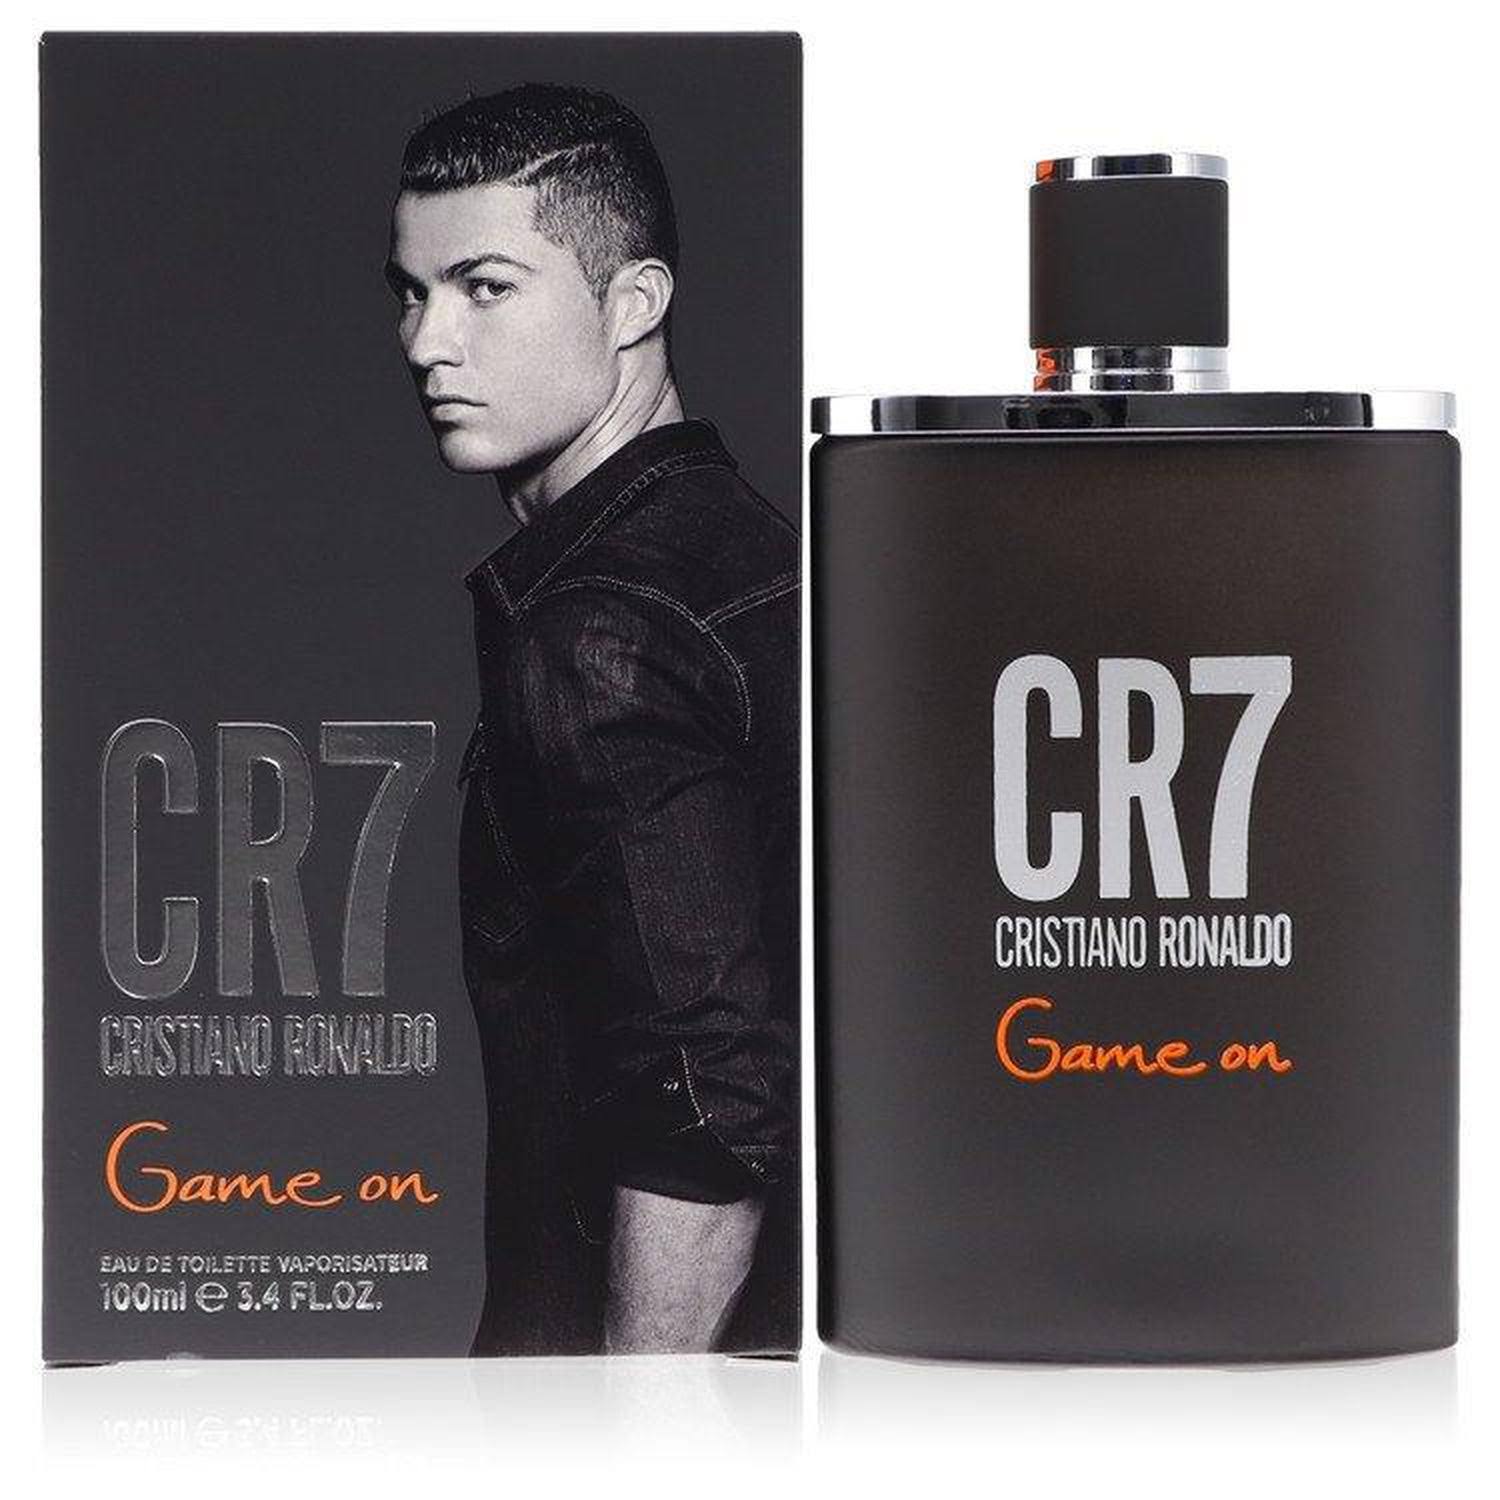 Cristiano Ronaldo - CR7 Game On 100ml Eau de Toilette Spray for Men